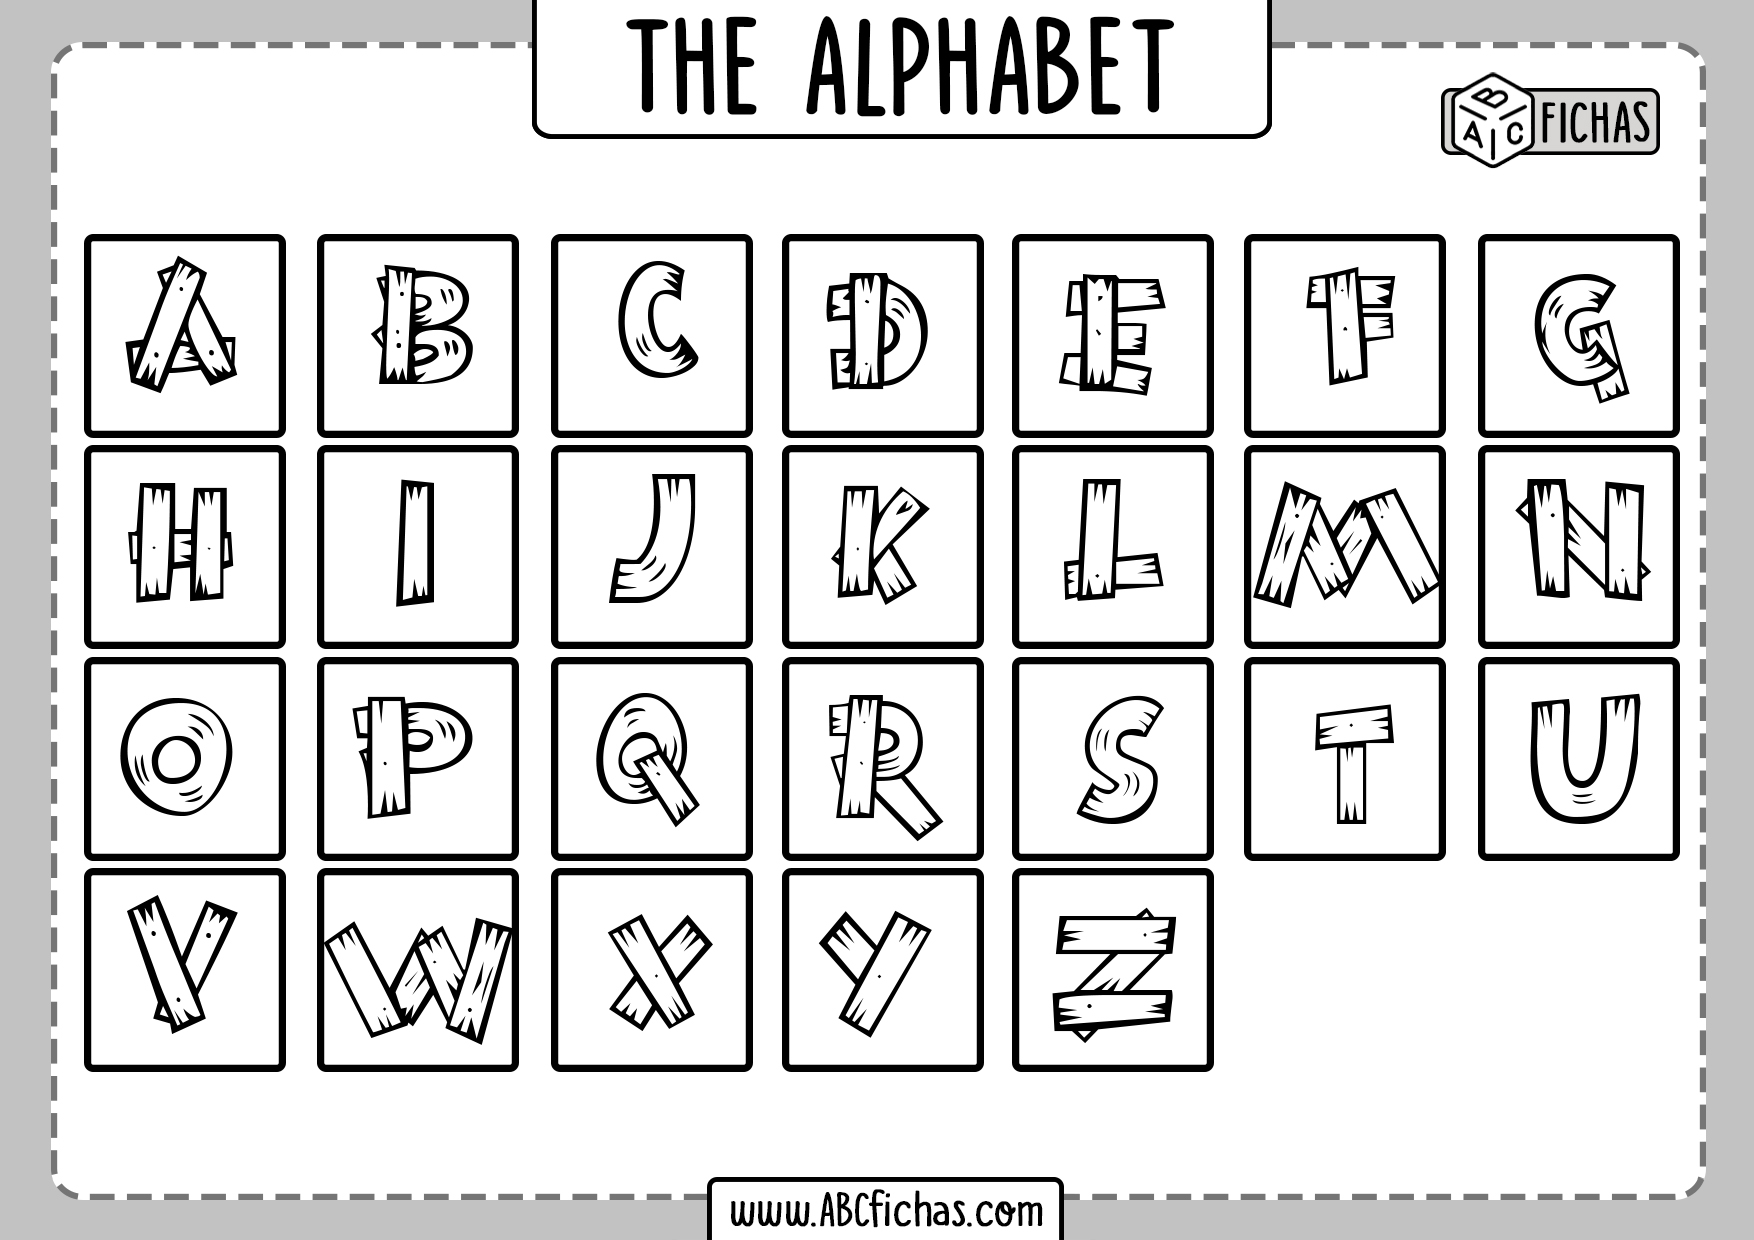 the-alphabet-worksheet-abc-fichas